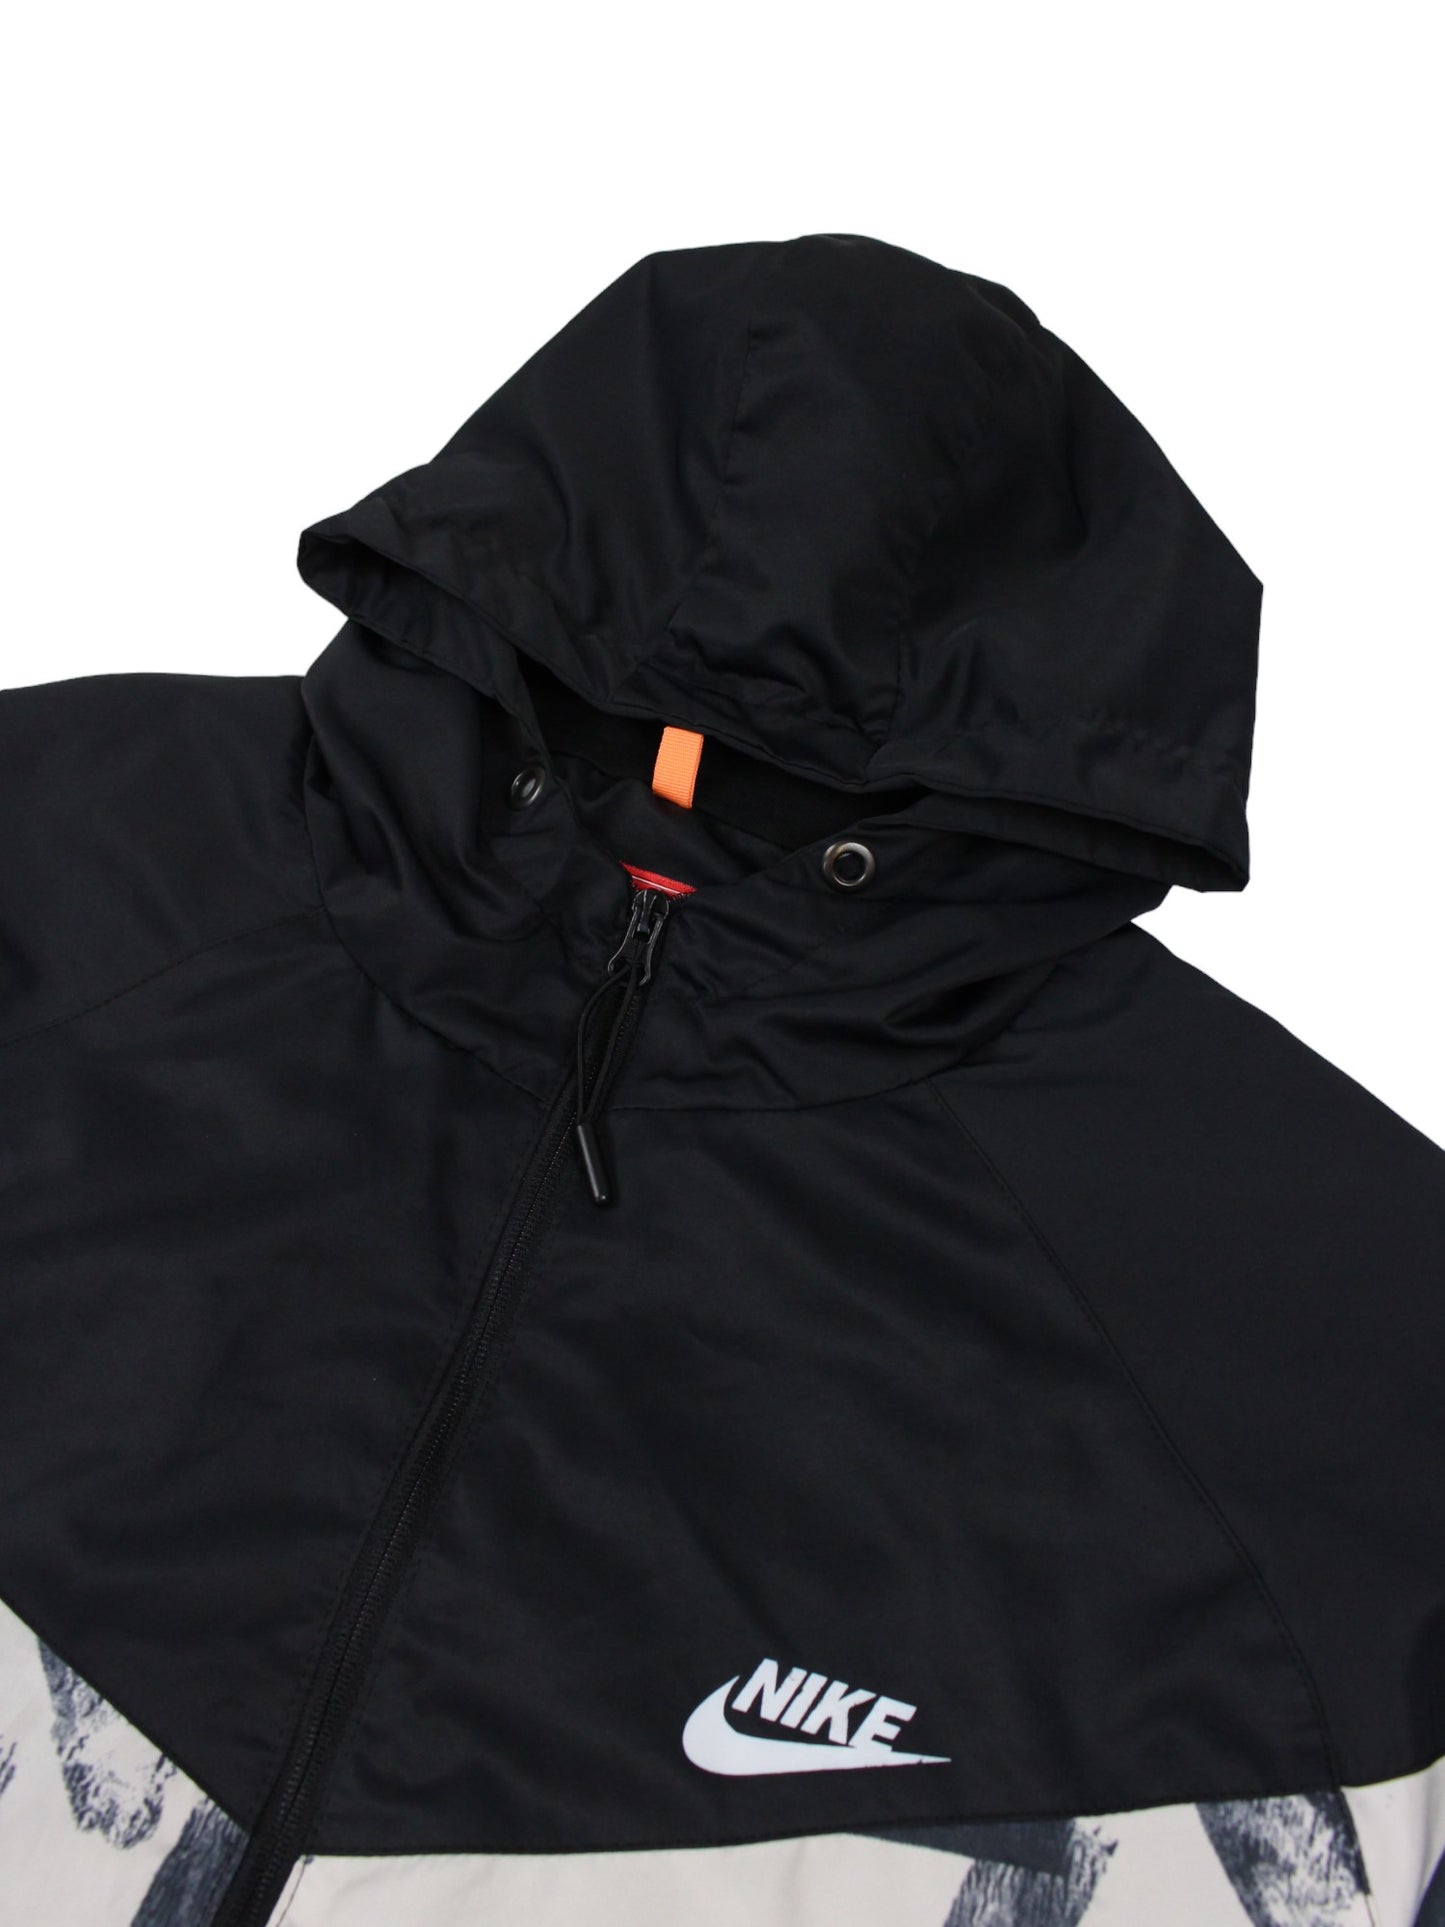 Nike Black Patterned Light Jacket (L)